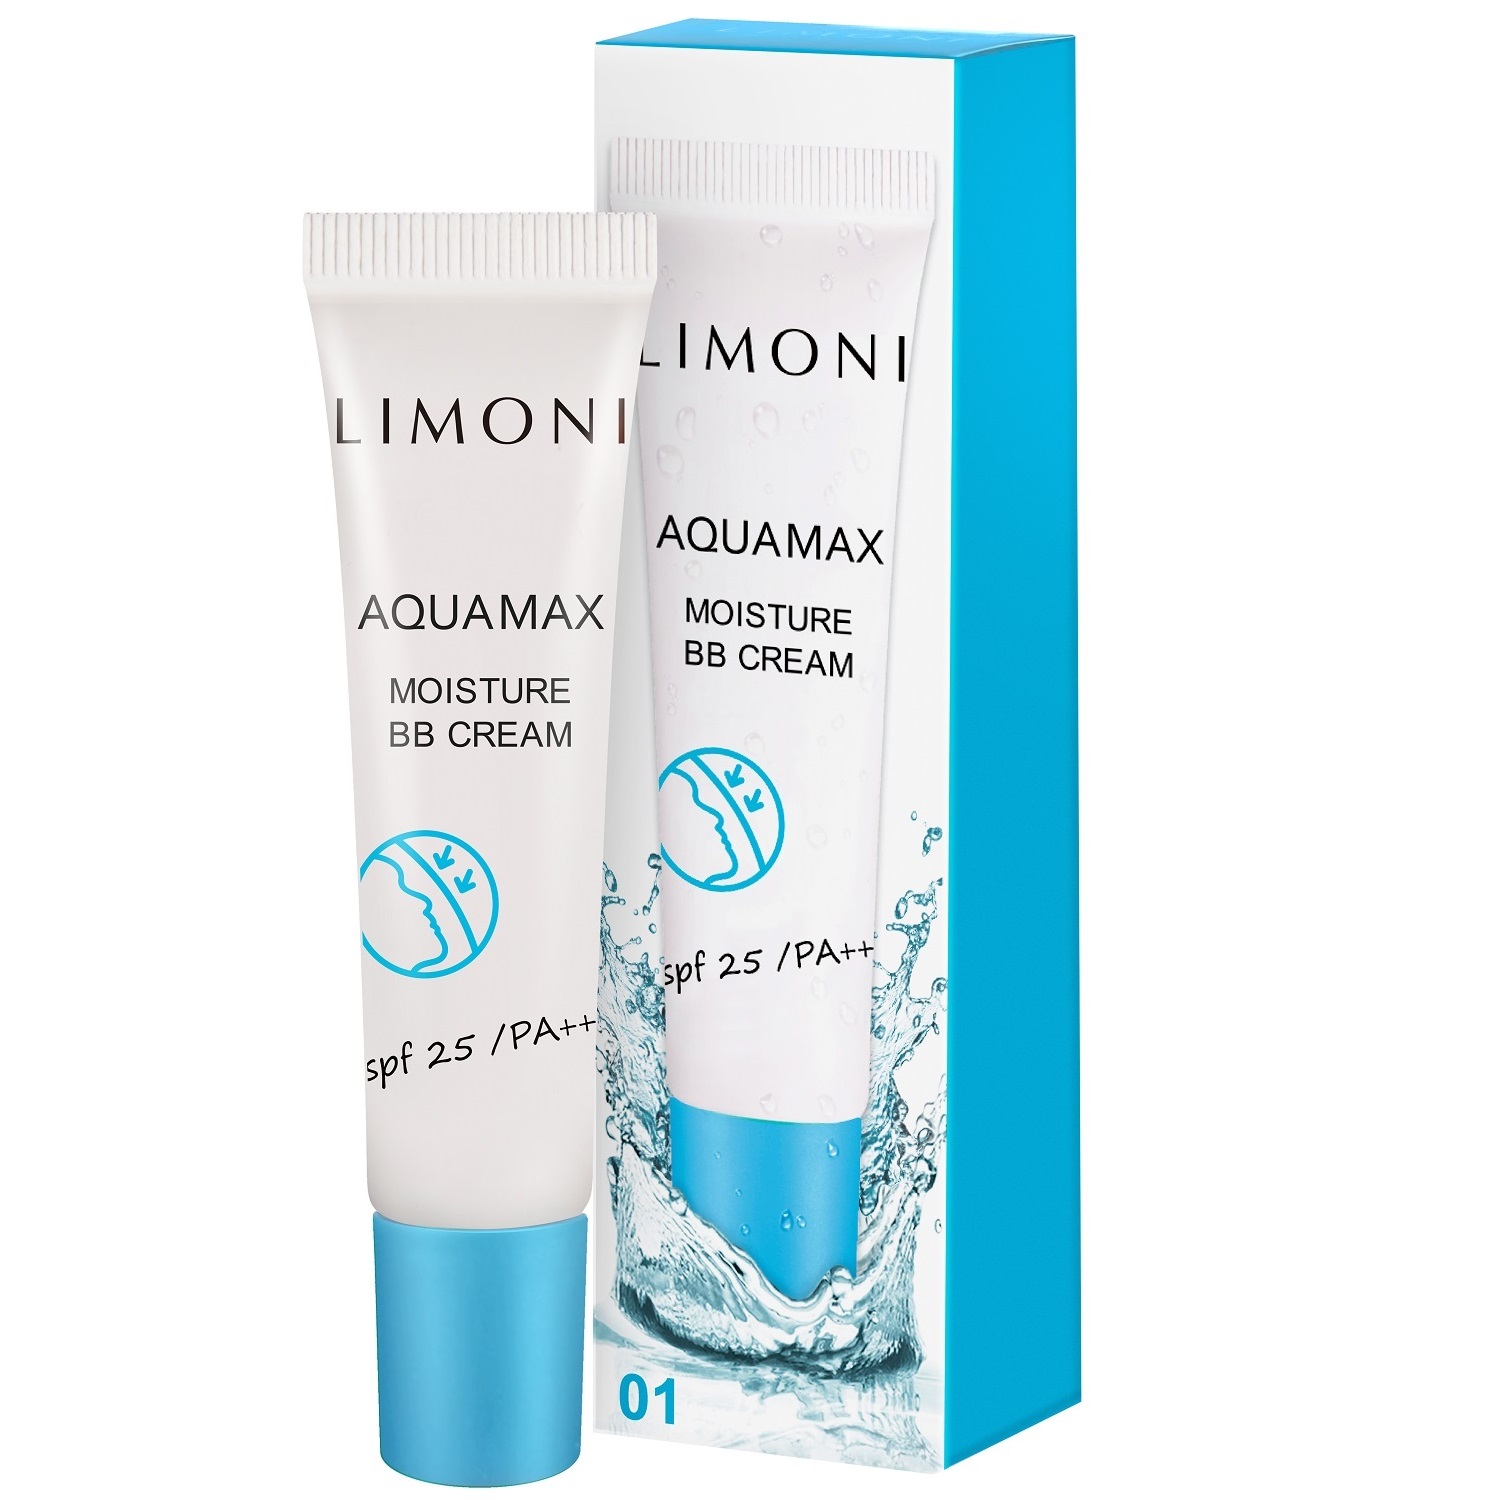 Limoni Увлажняющий ББ-крем для лица Moisture BB Cream SPF 27, 15 мл (Limoni, Aquamax)